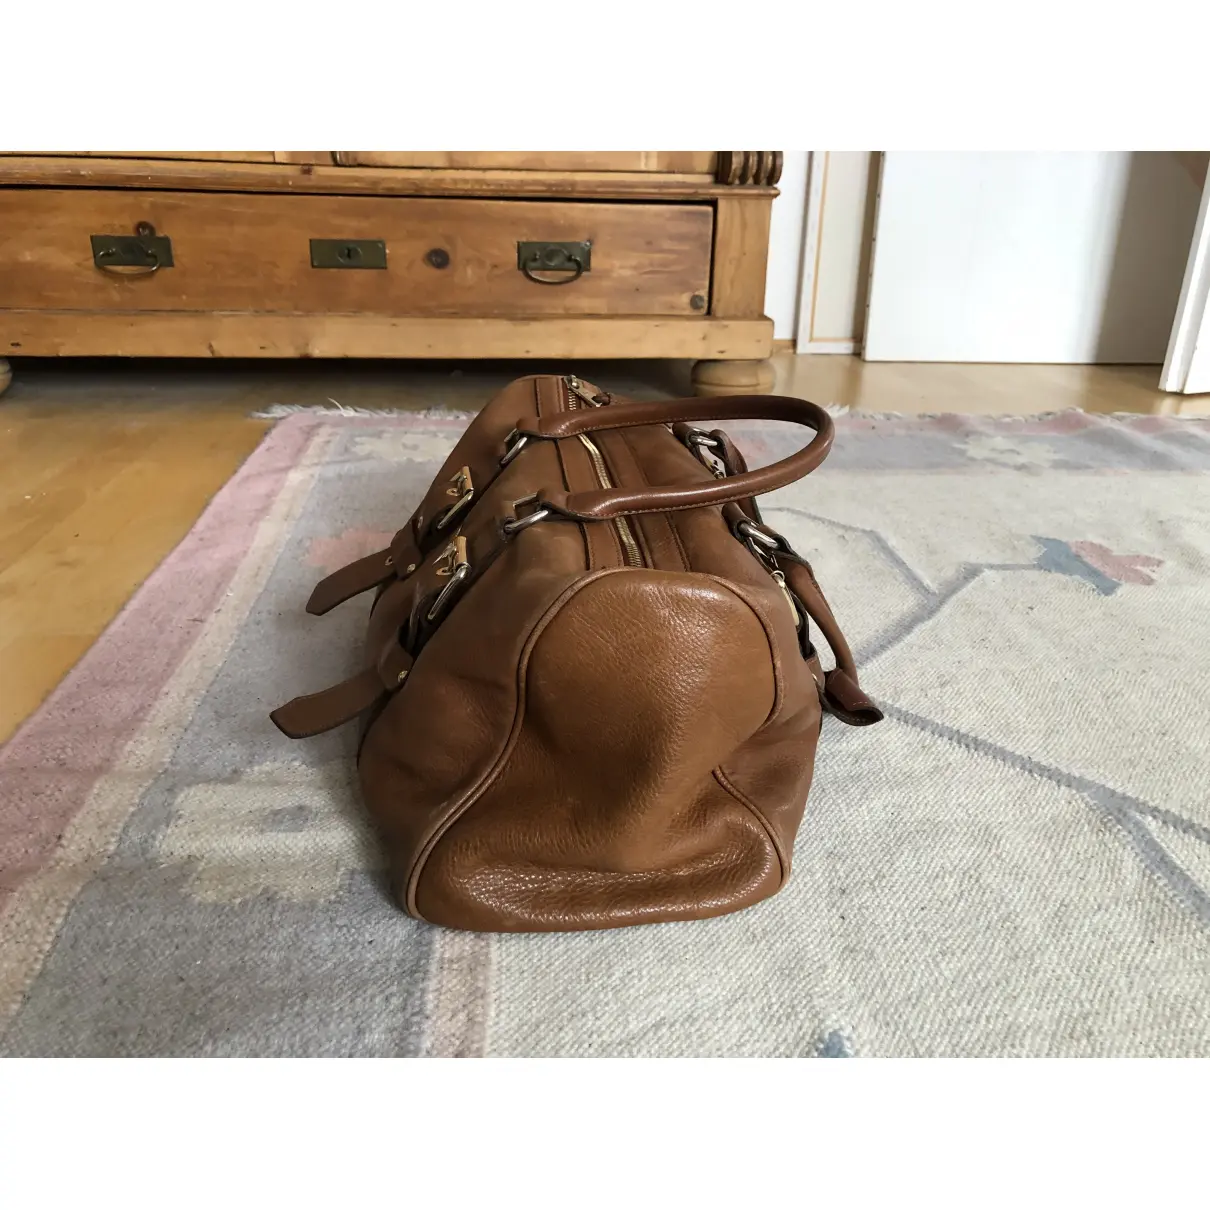 Buy Longchamp Kate Moss leather handbag online